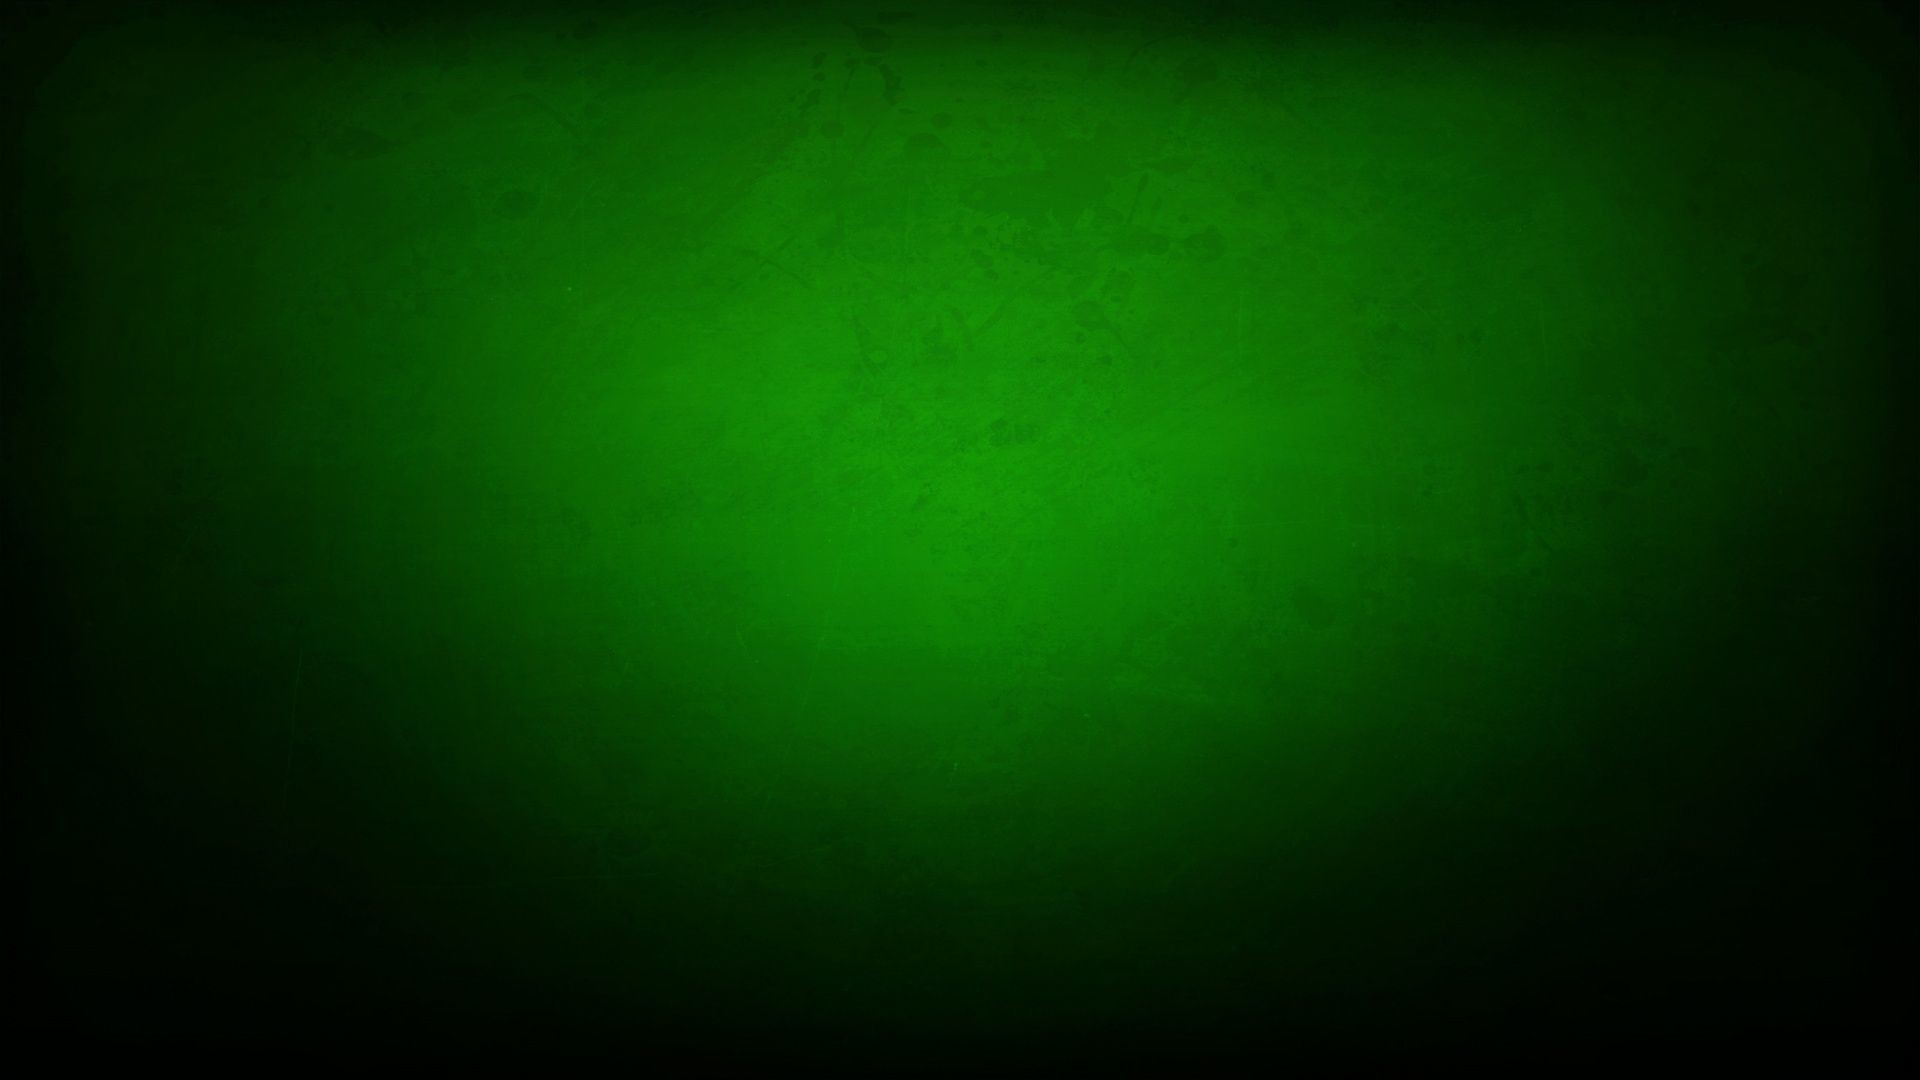 1920x1080 Green Backgrounds Image Wallpaper 1920Ã1080 Green Backgrounds (36 Wallpapers)  | Adorable Wallpapers